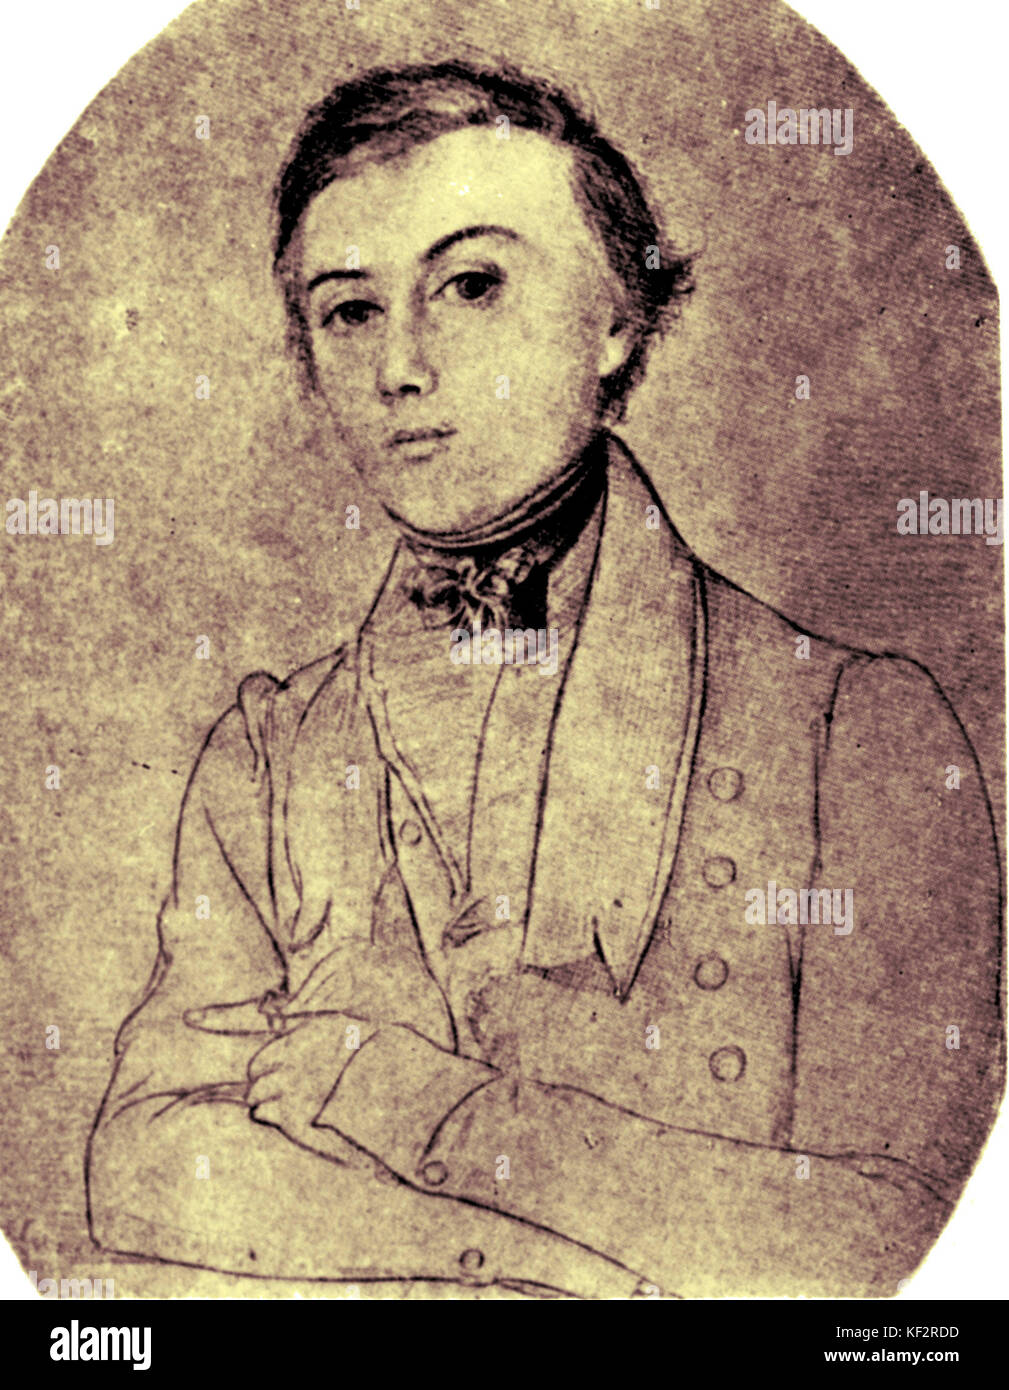 Wilhelm Müller. Amigo de Schubert, escribió la letra de Schubert 'Die schöne Müllerin'. Autor alemán,1794-1857. Foto de stock